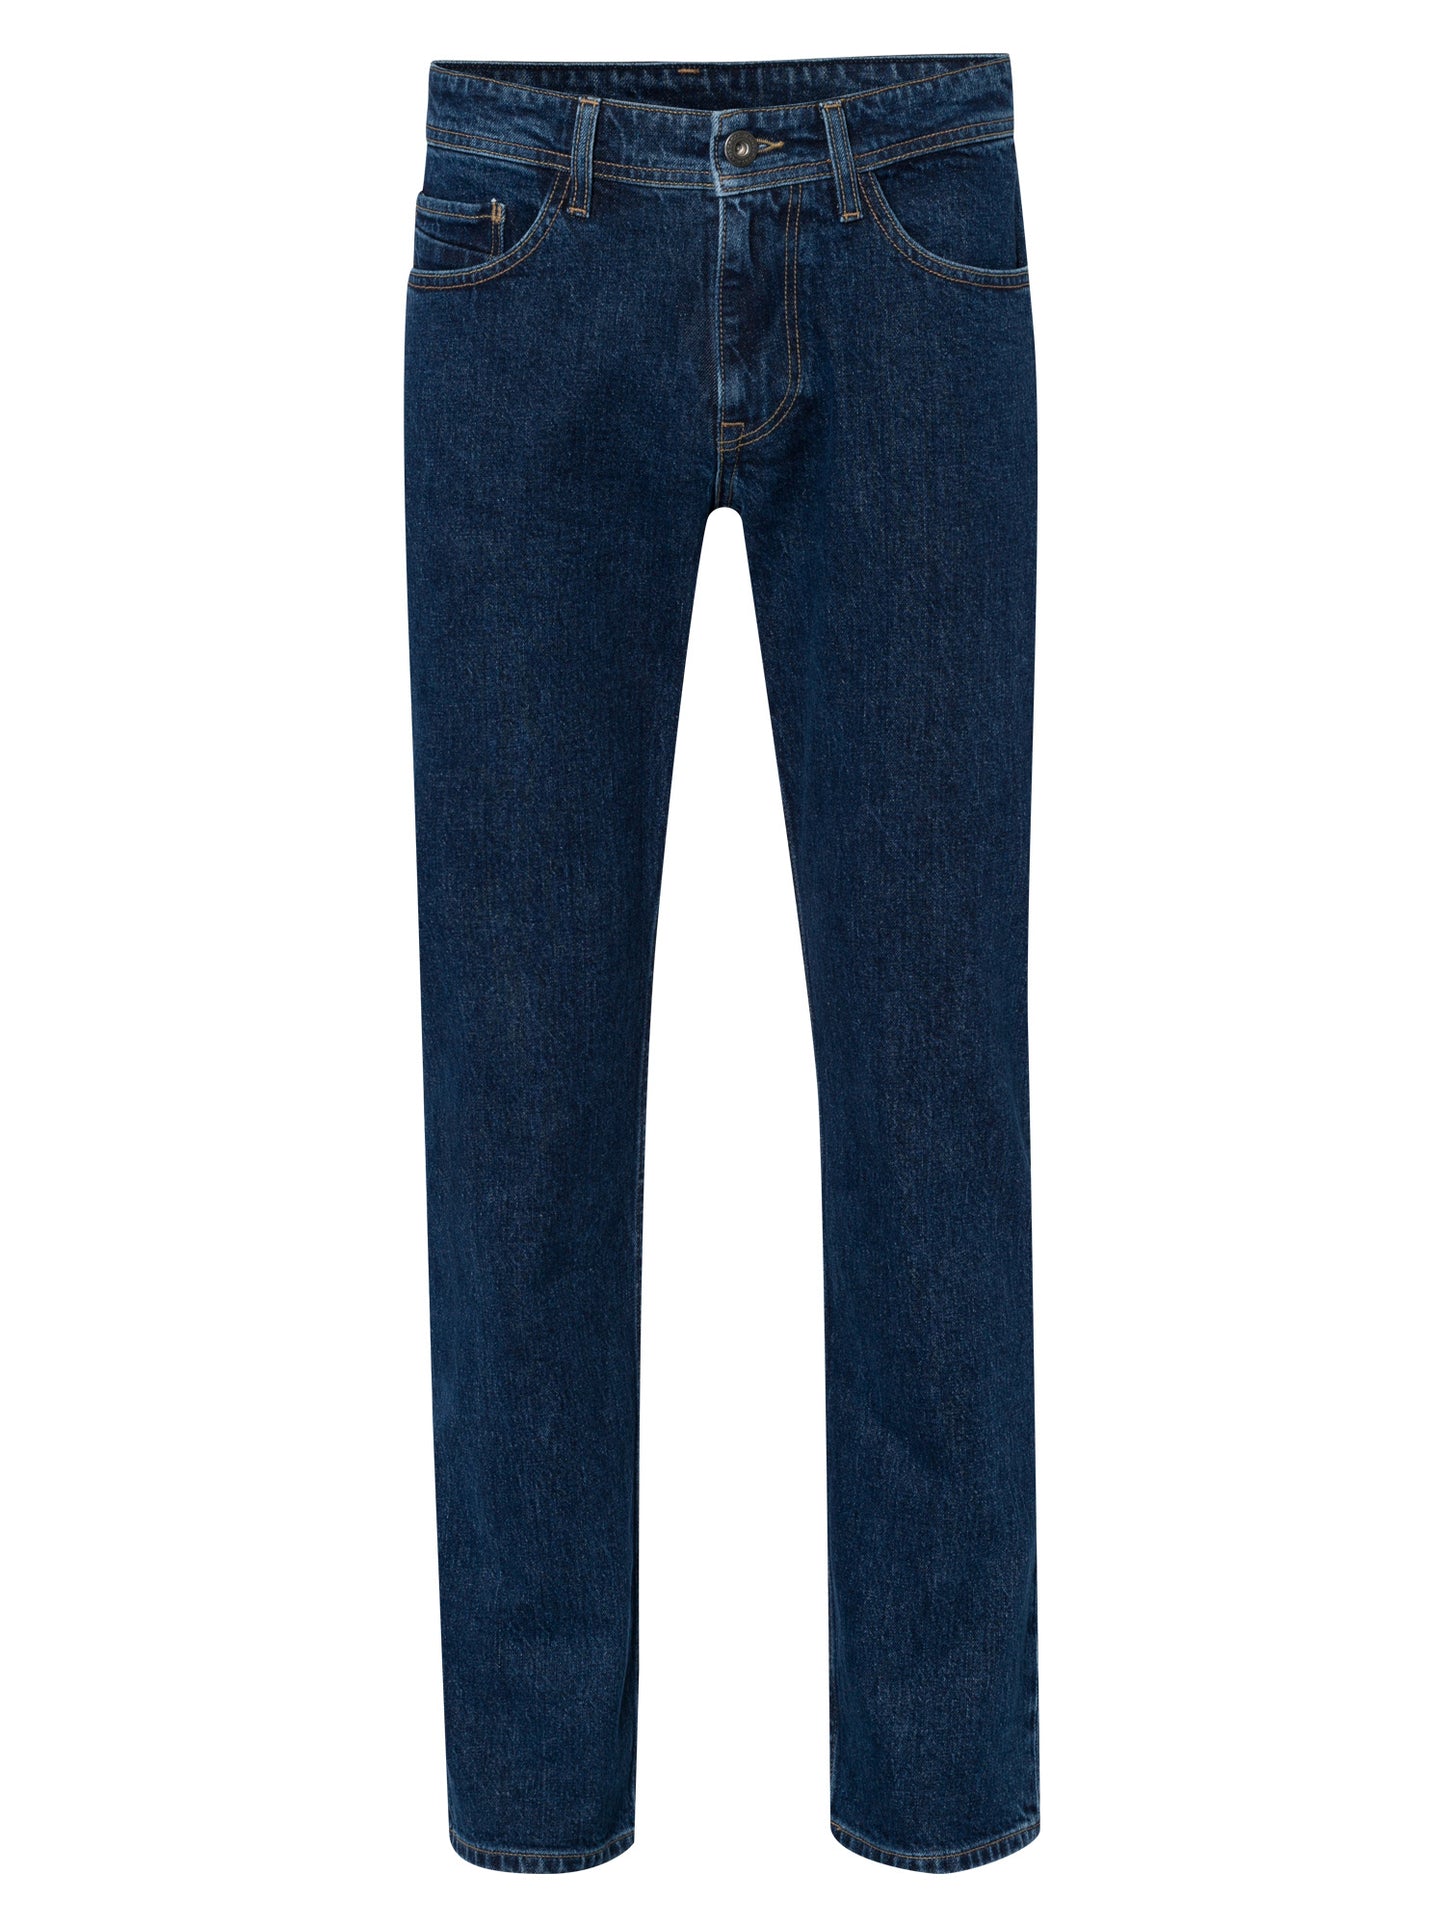 Antonio men's jeans relaxed fit regular waist straight leg blue